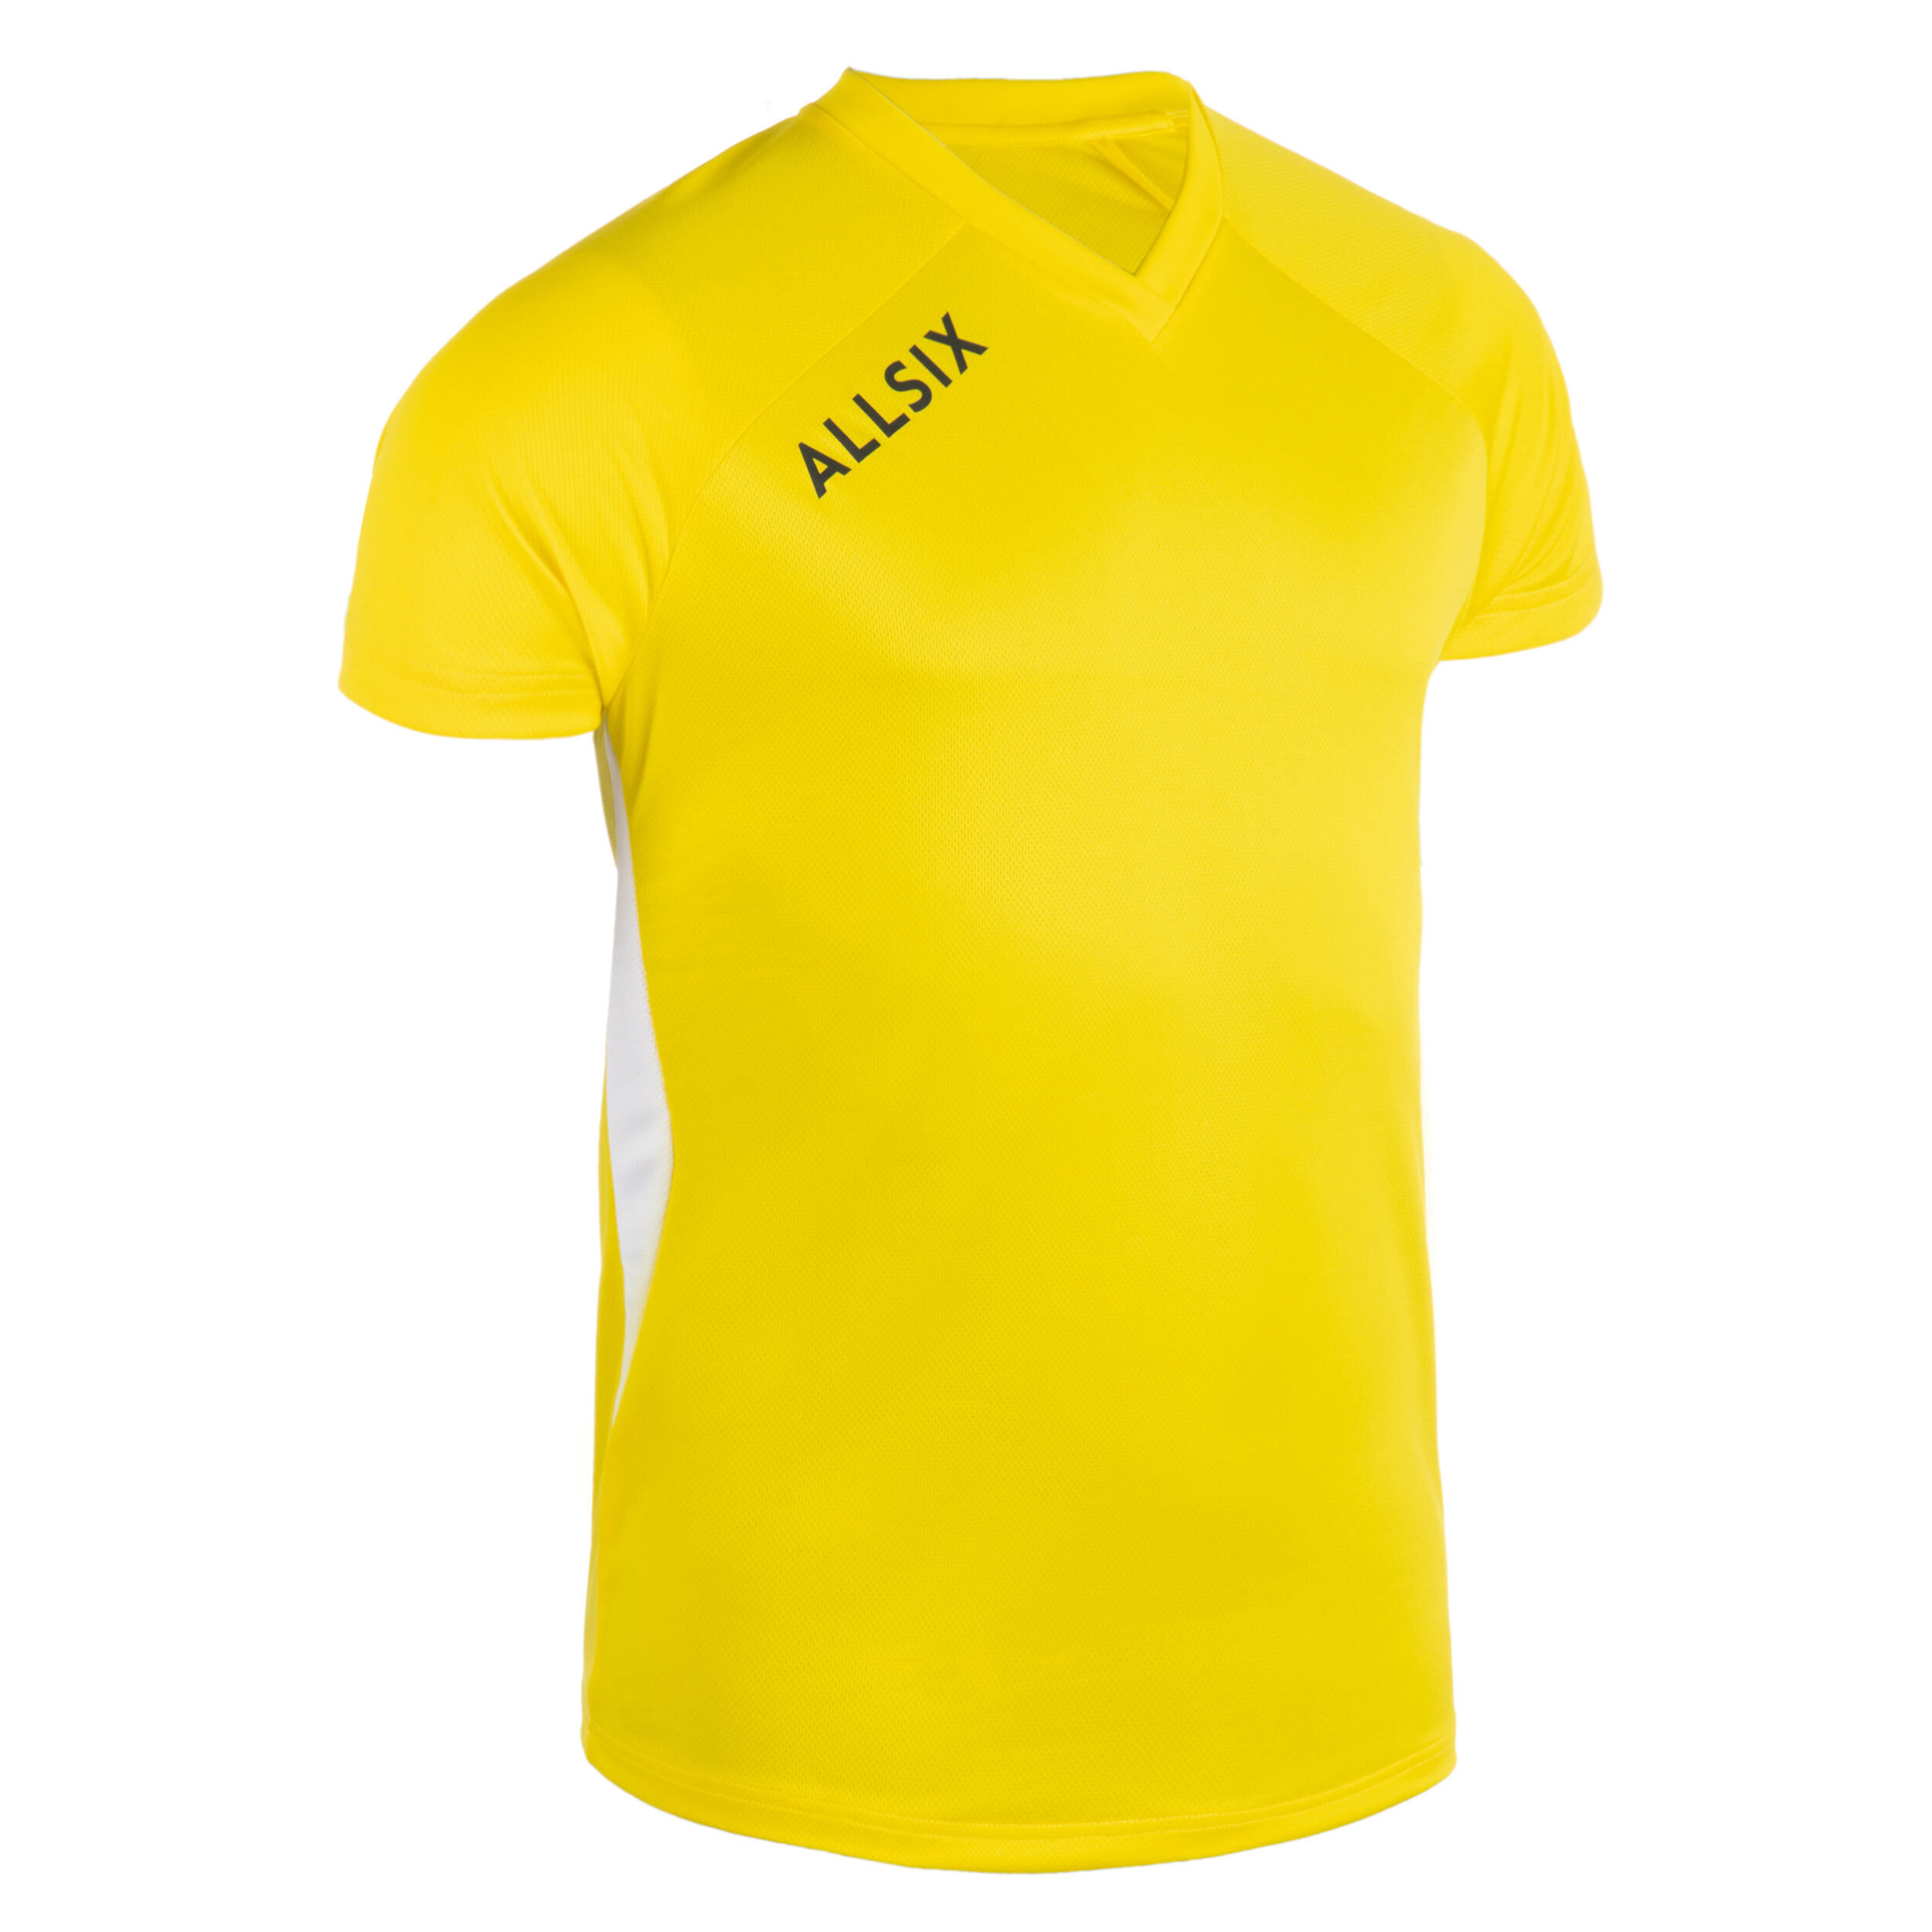 ALLSIX V100 Volleyball Jersey - Yellow